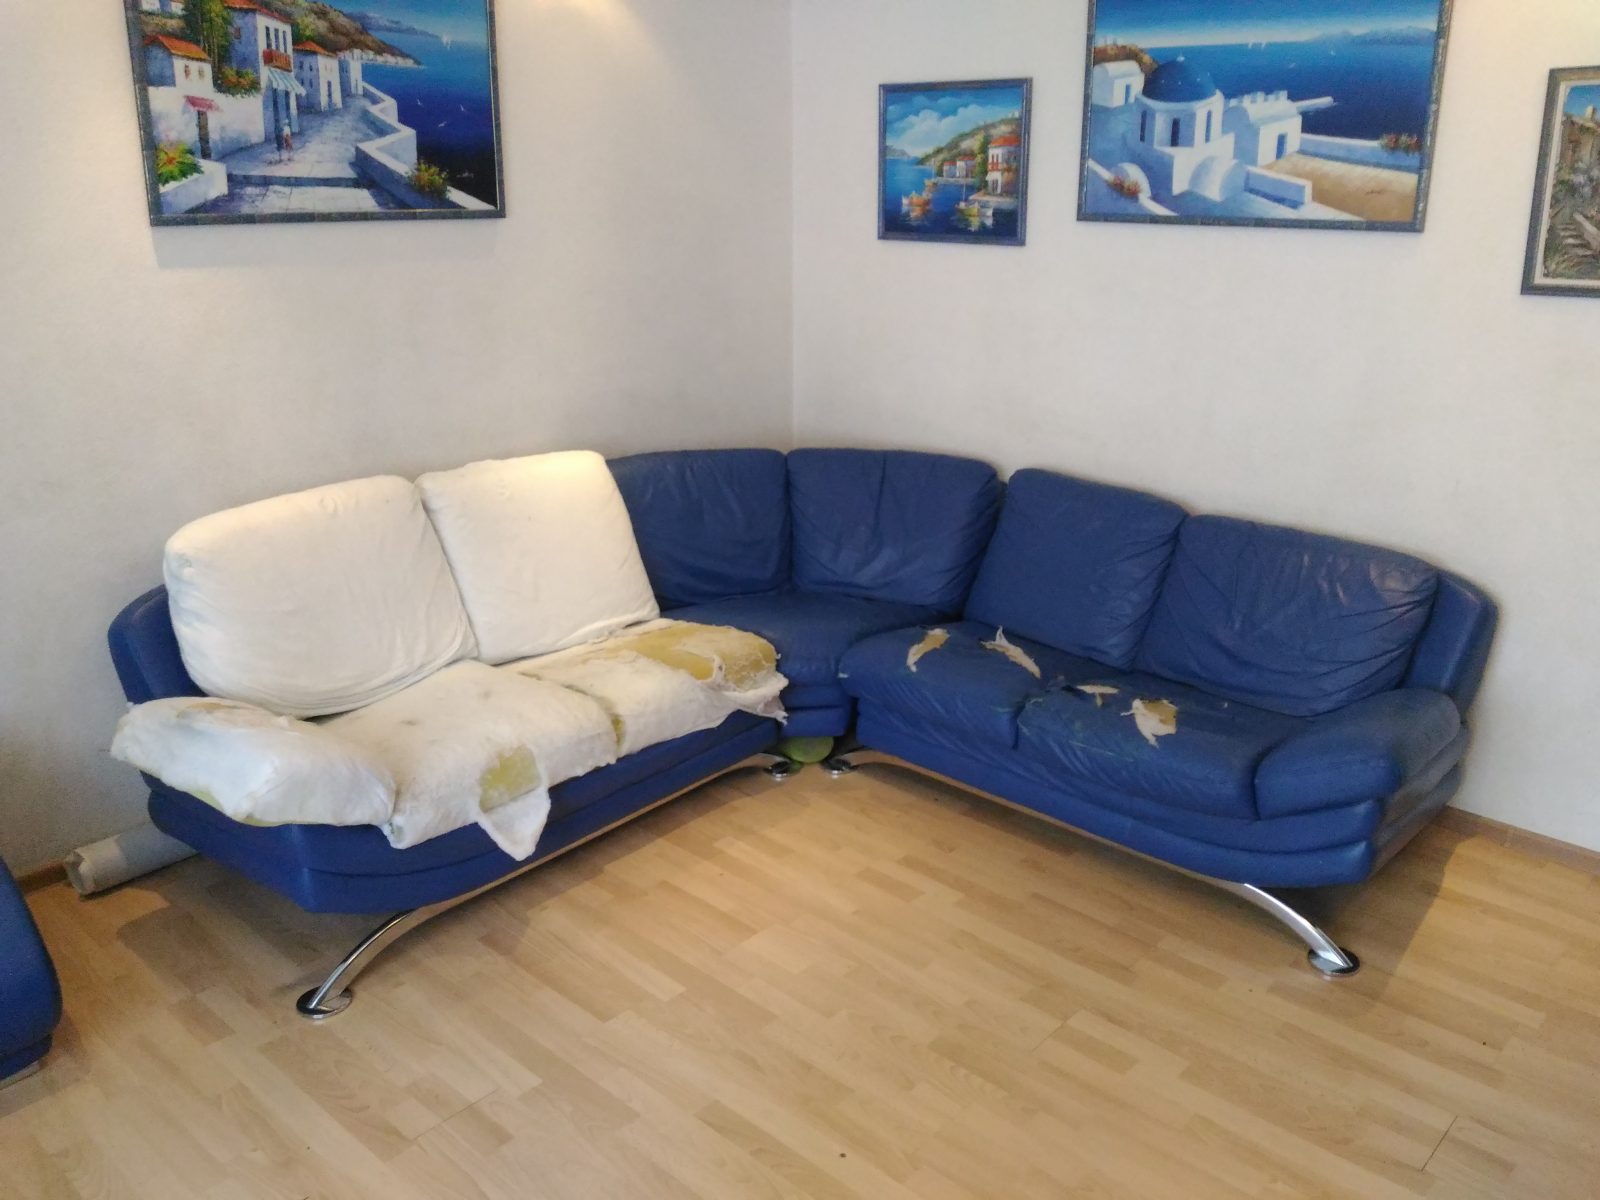 Замена поролона в диване в Москве - цена, не дорого